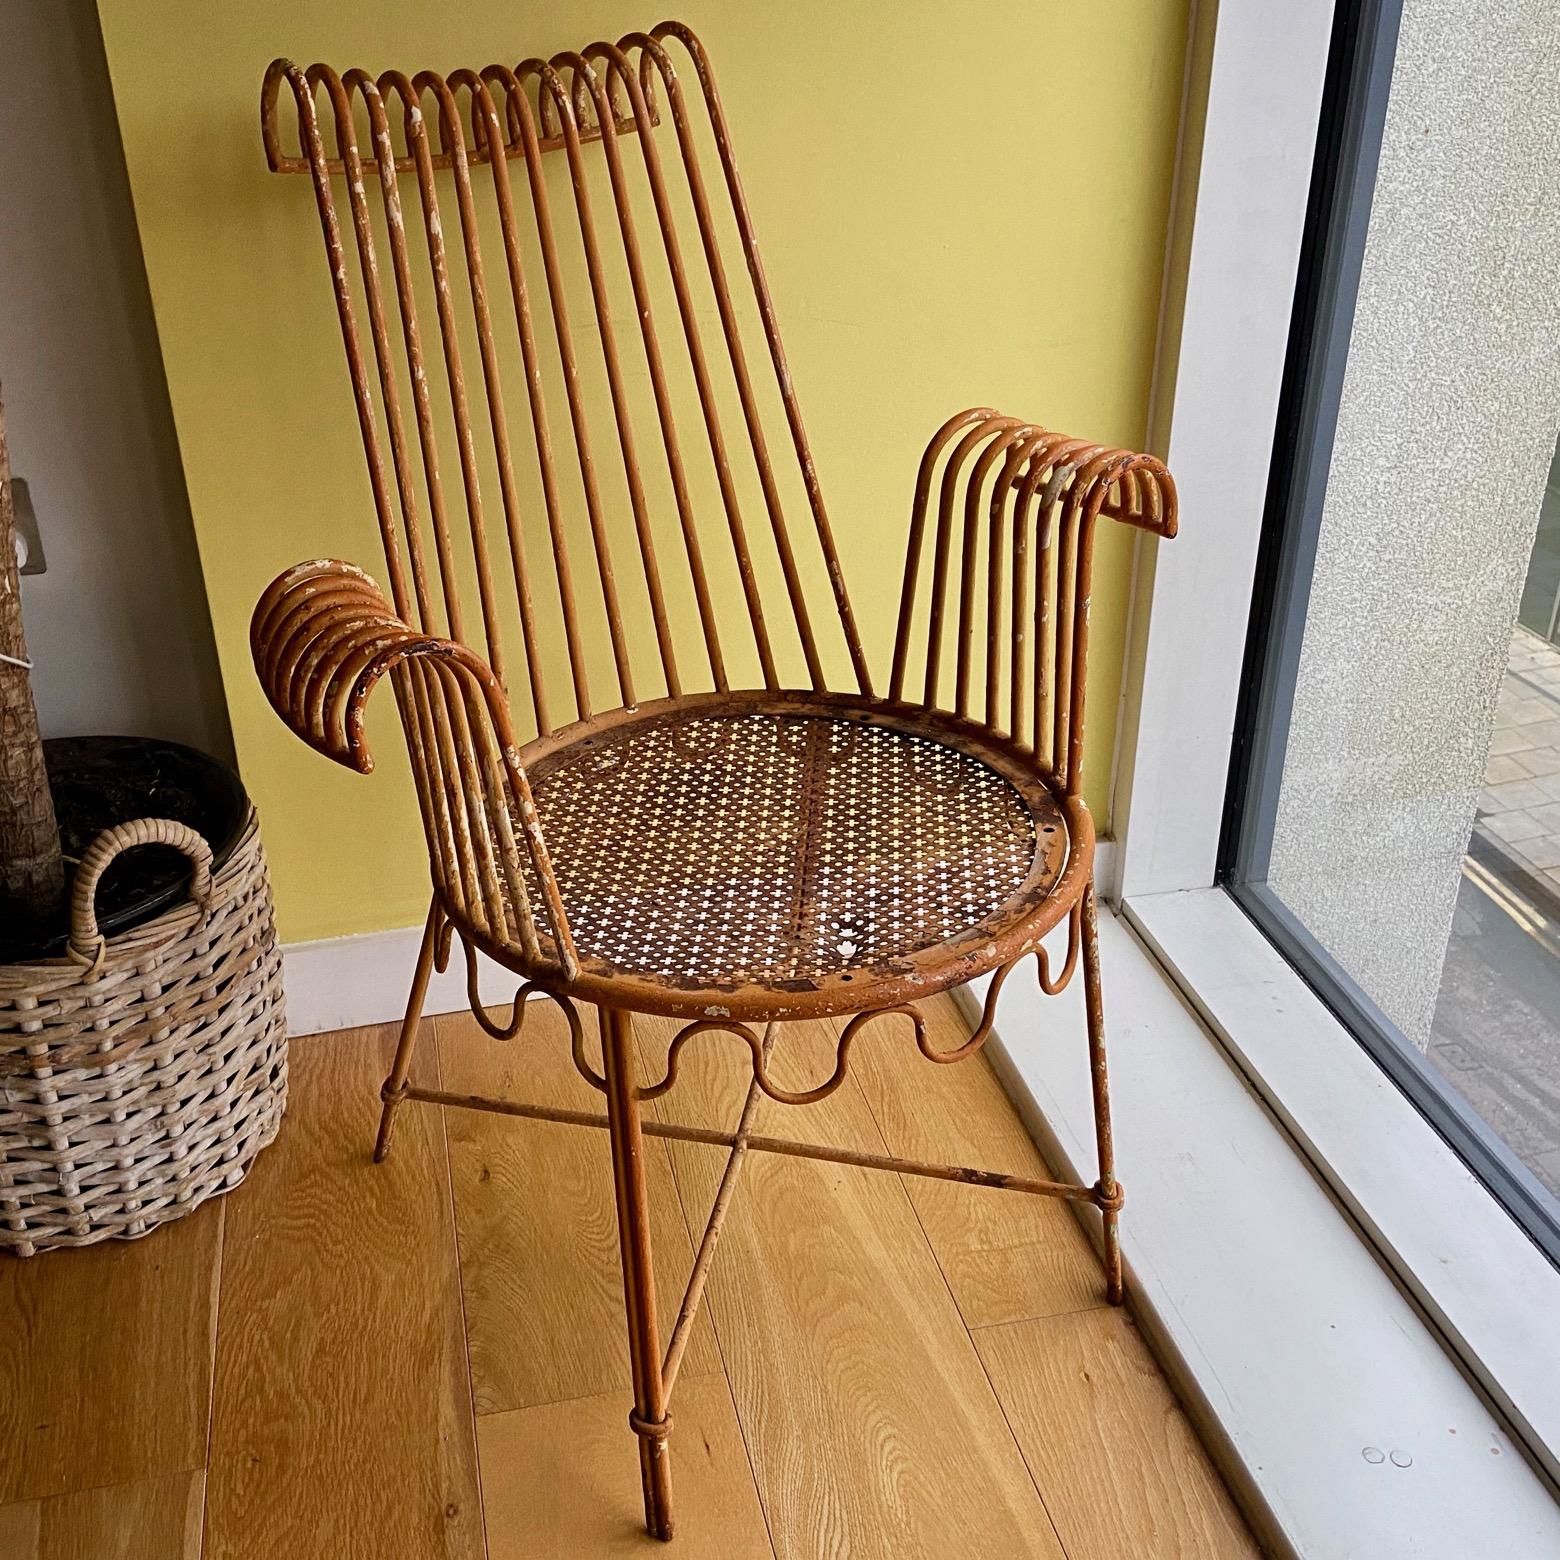 Painted Mathieu Matégot Metal Outdoor Chair Similar to the Cap d'Ail Model, 1950s French